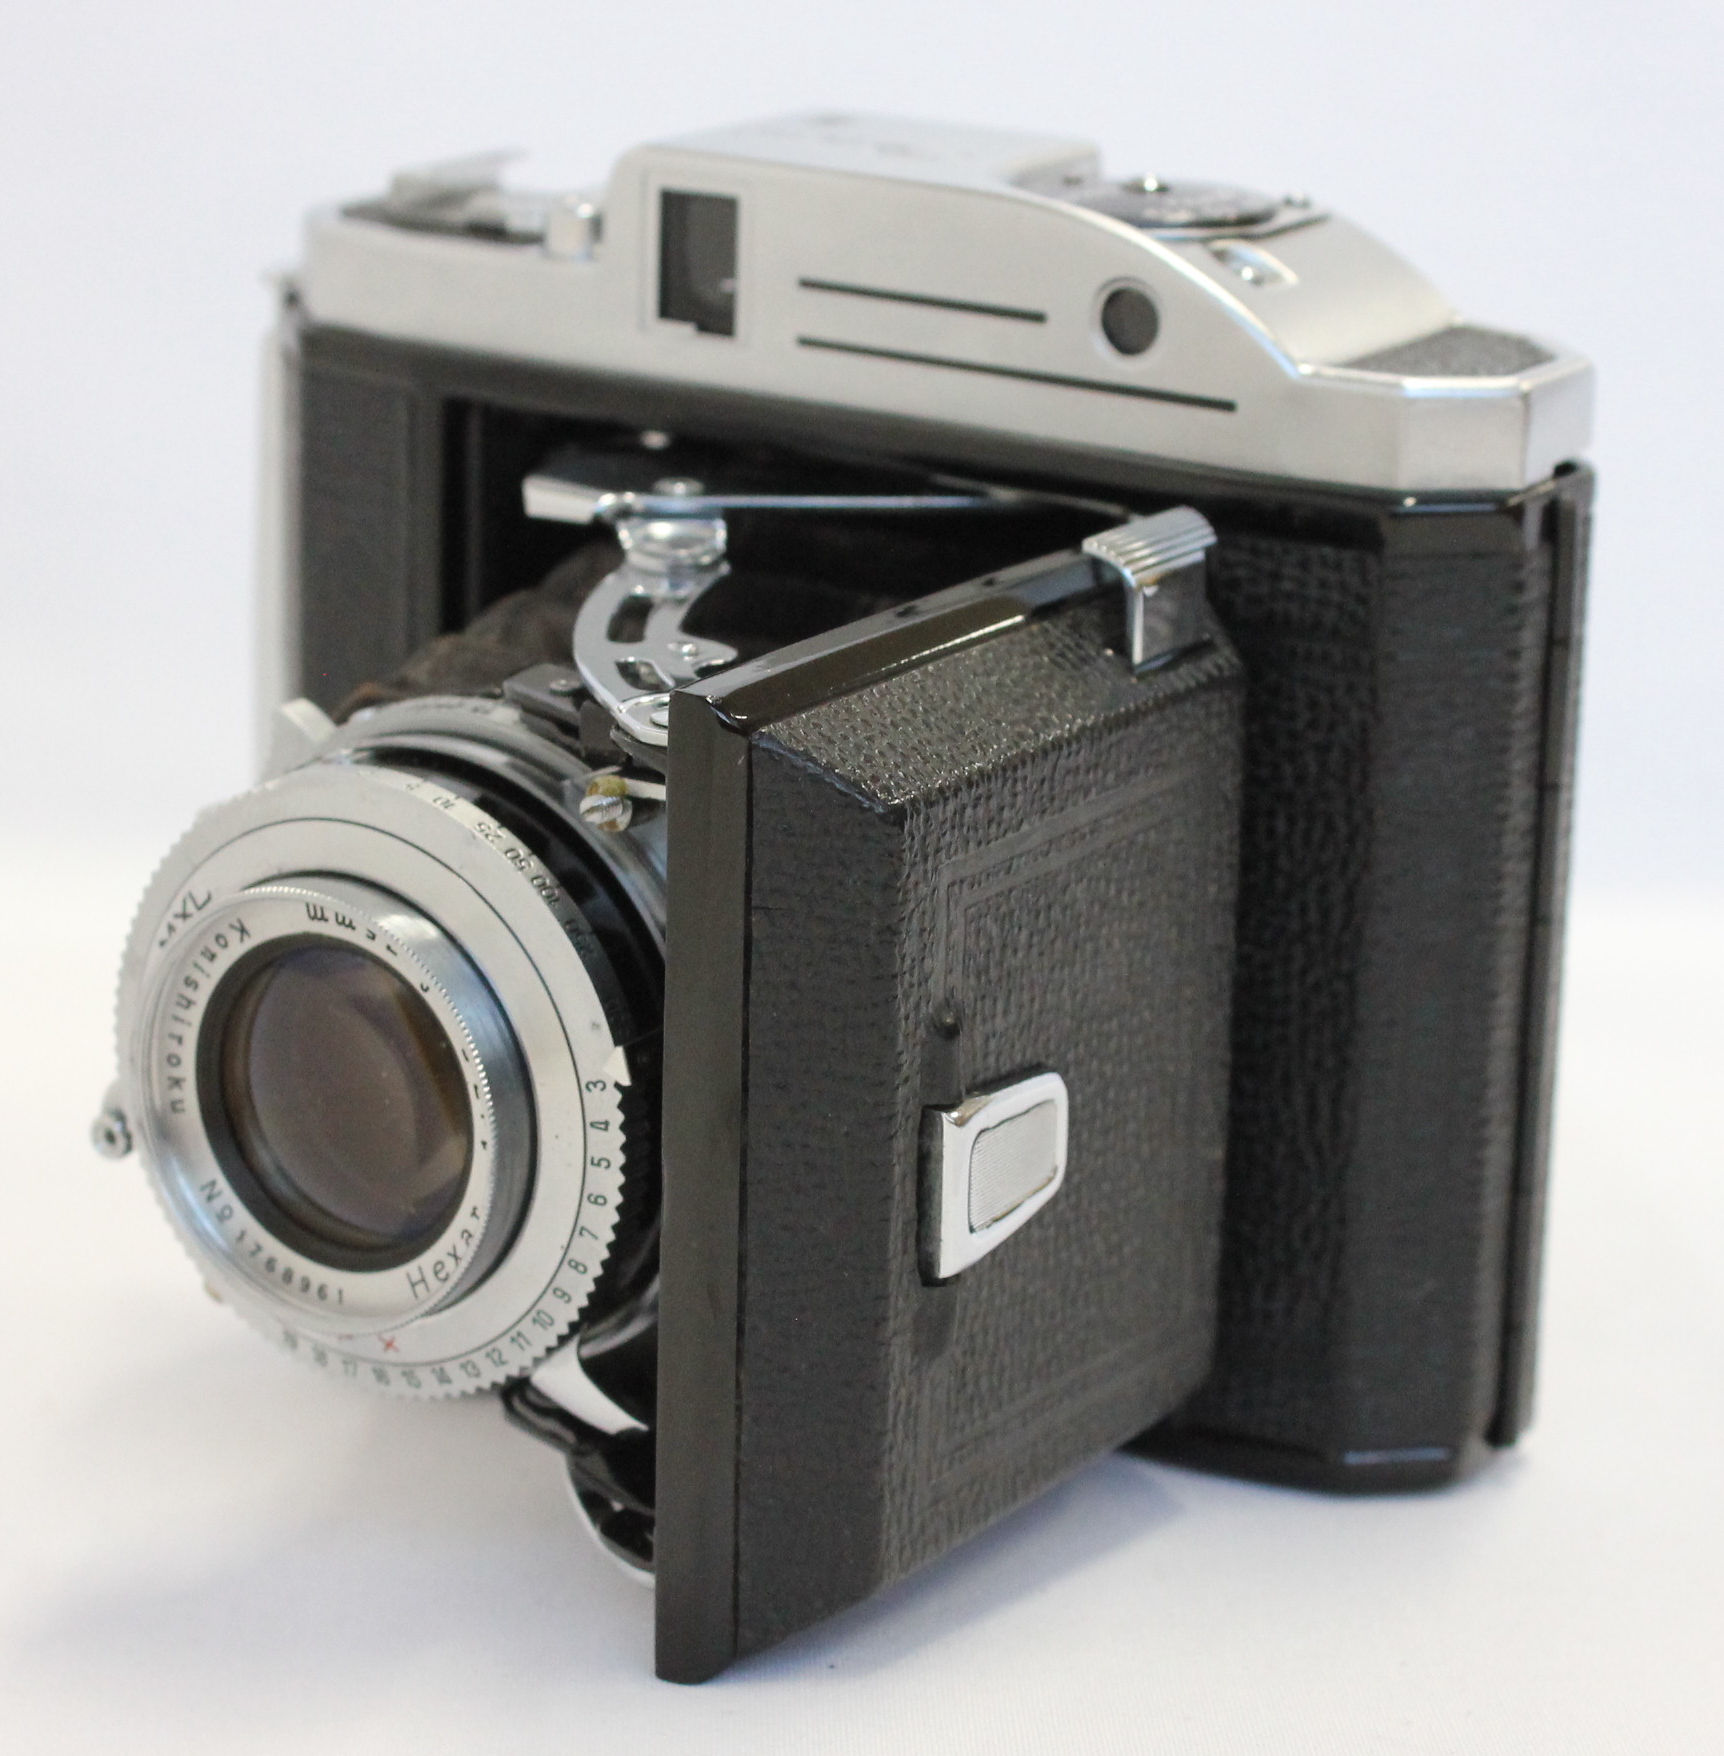 Japan Used Camera Shop | [Near Mint] Konica Konishiroku Pearl III  6x4.5 Camera with Hexar 75mm F/3.5 Lens from Japan